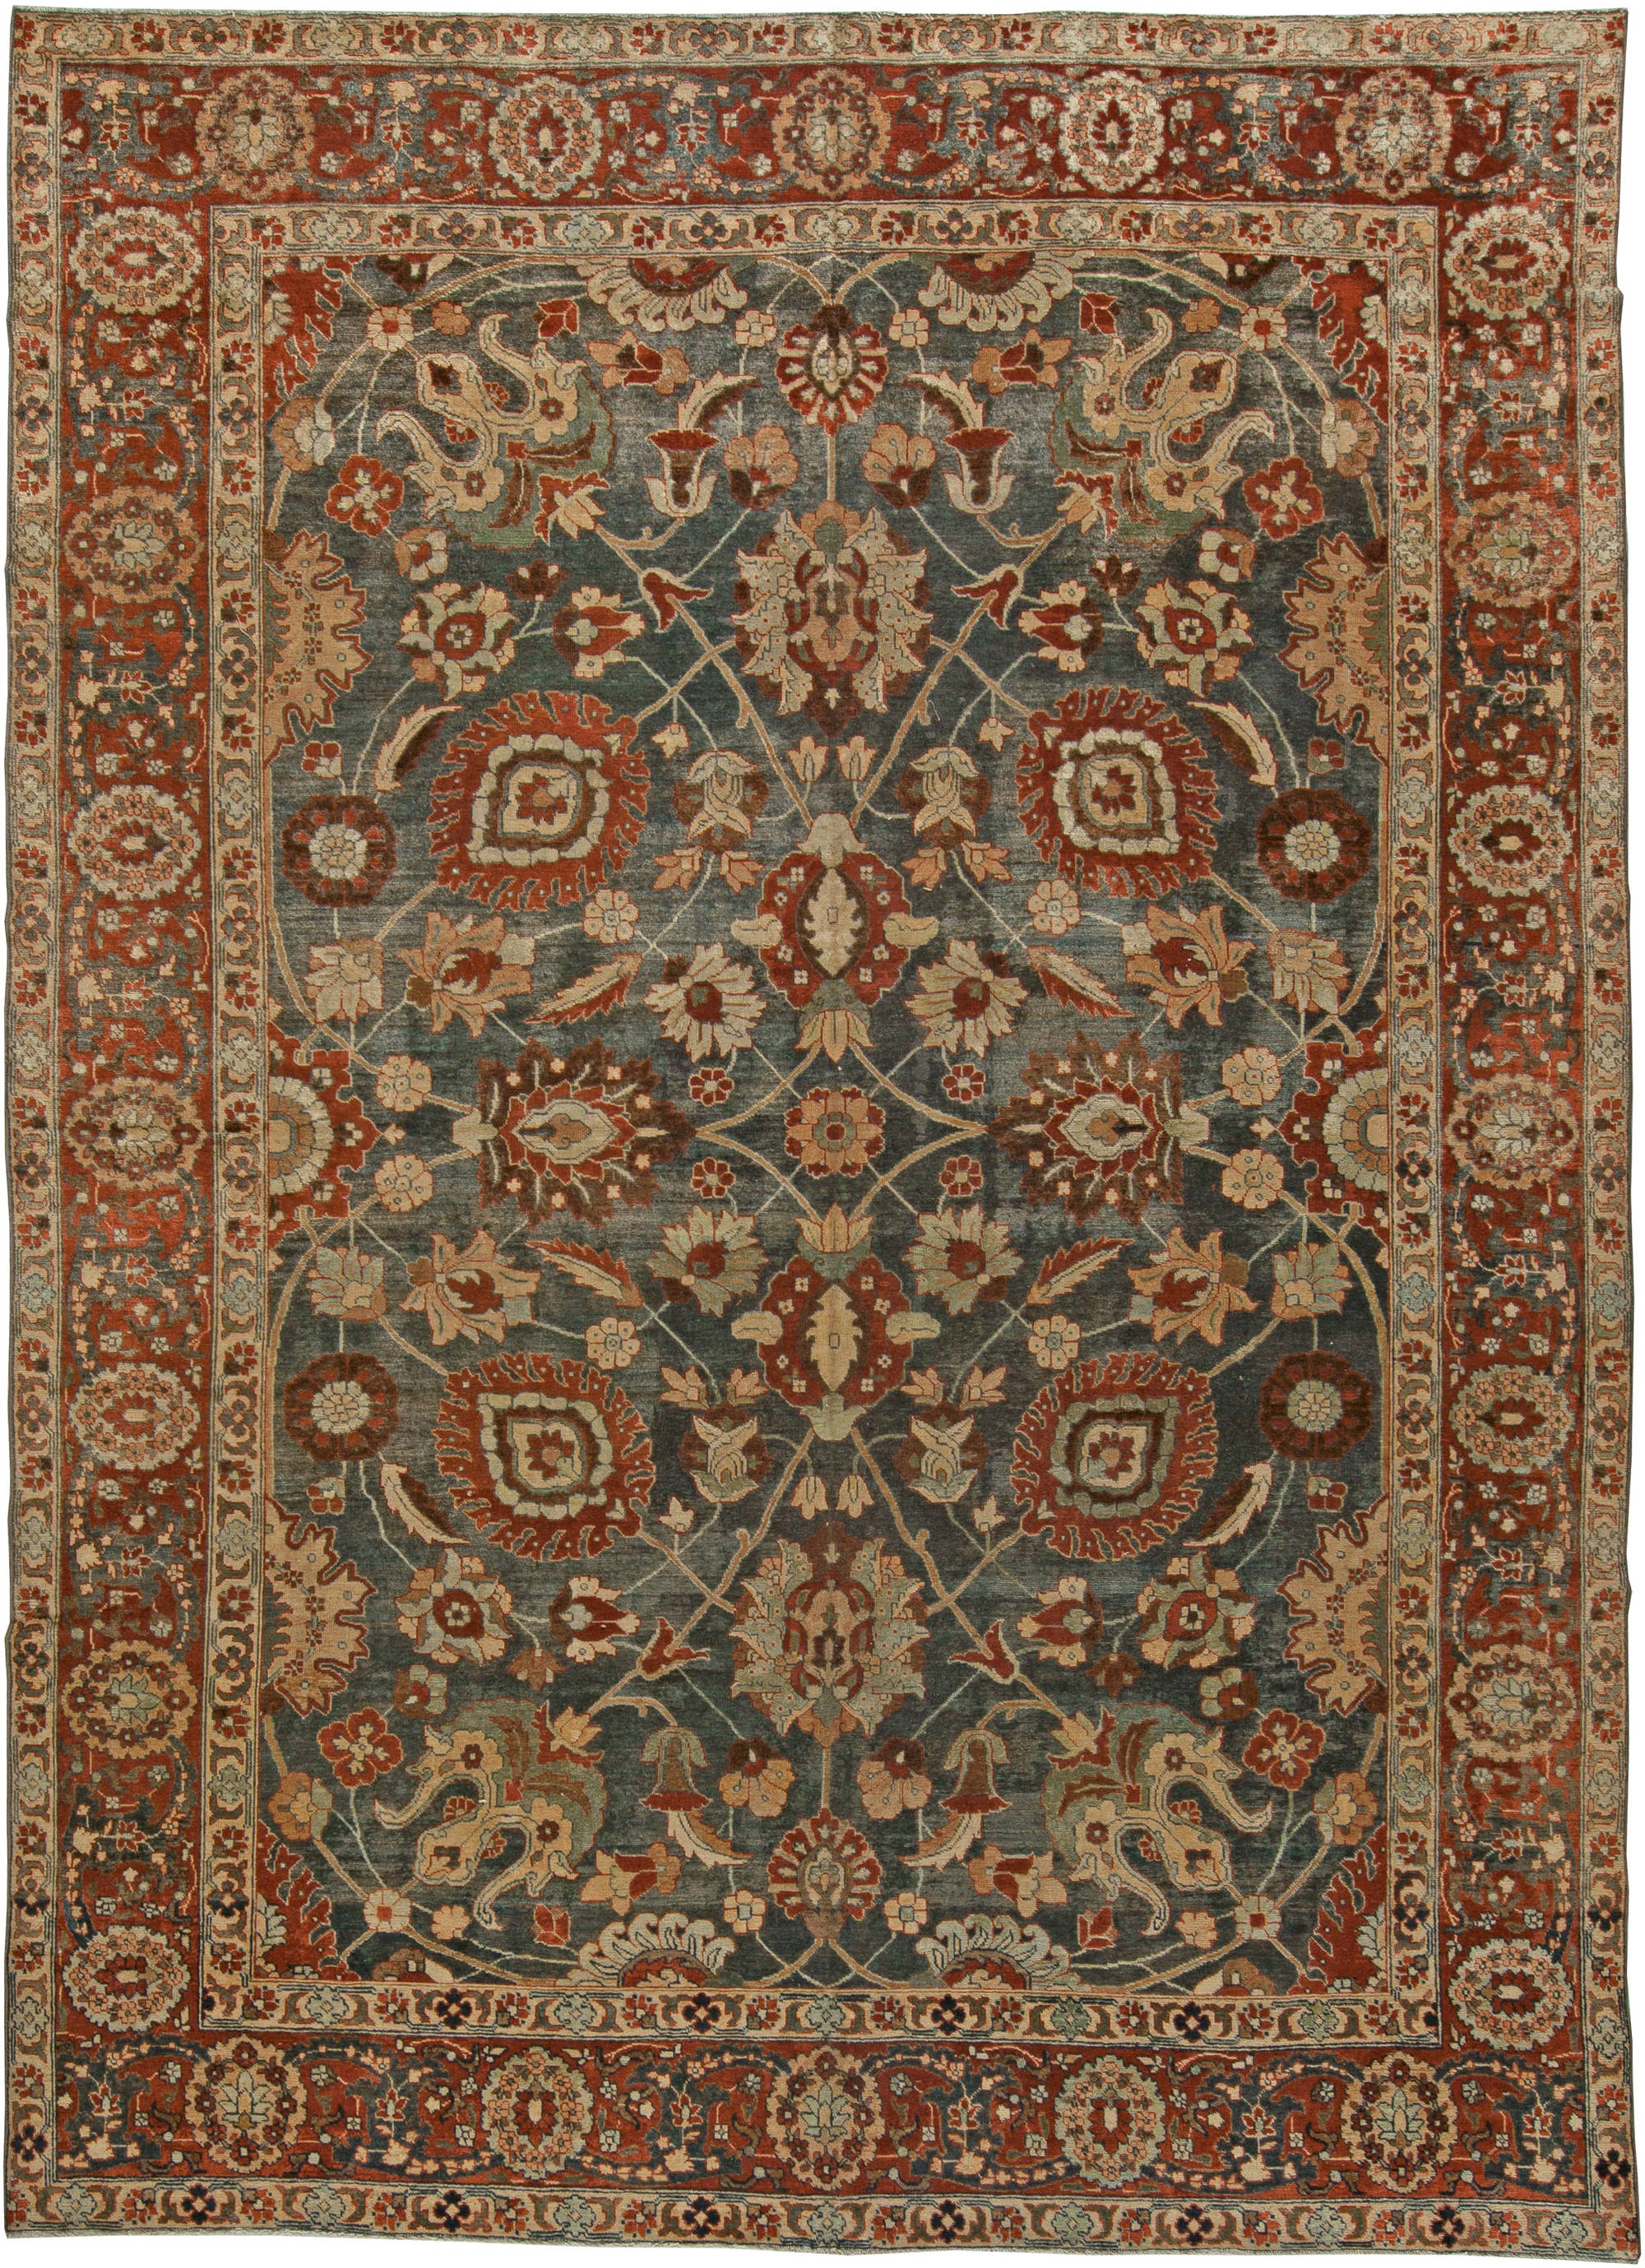 Persian Carpet photo - 9